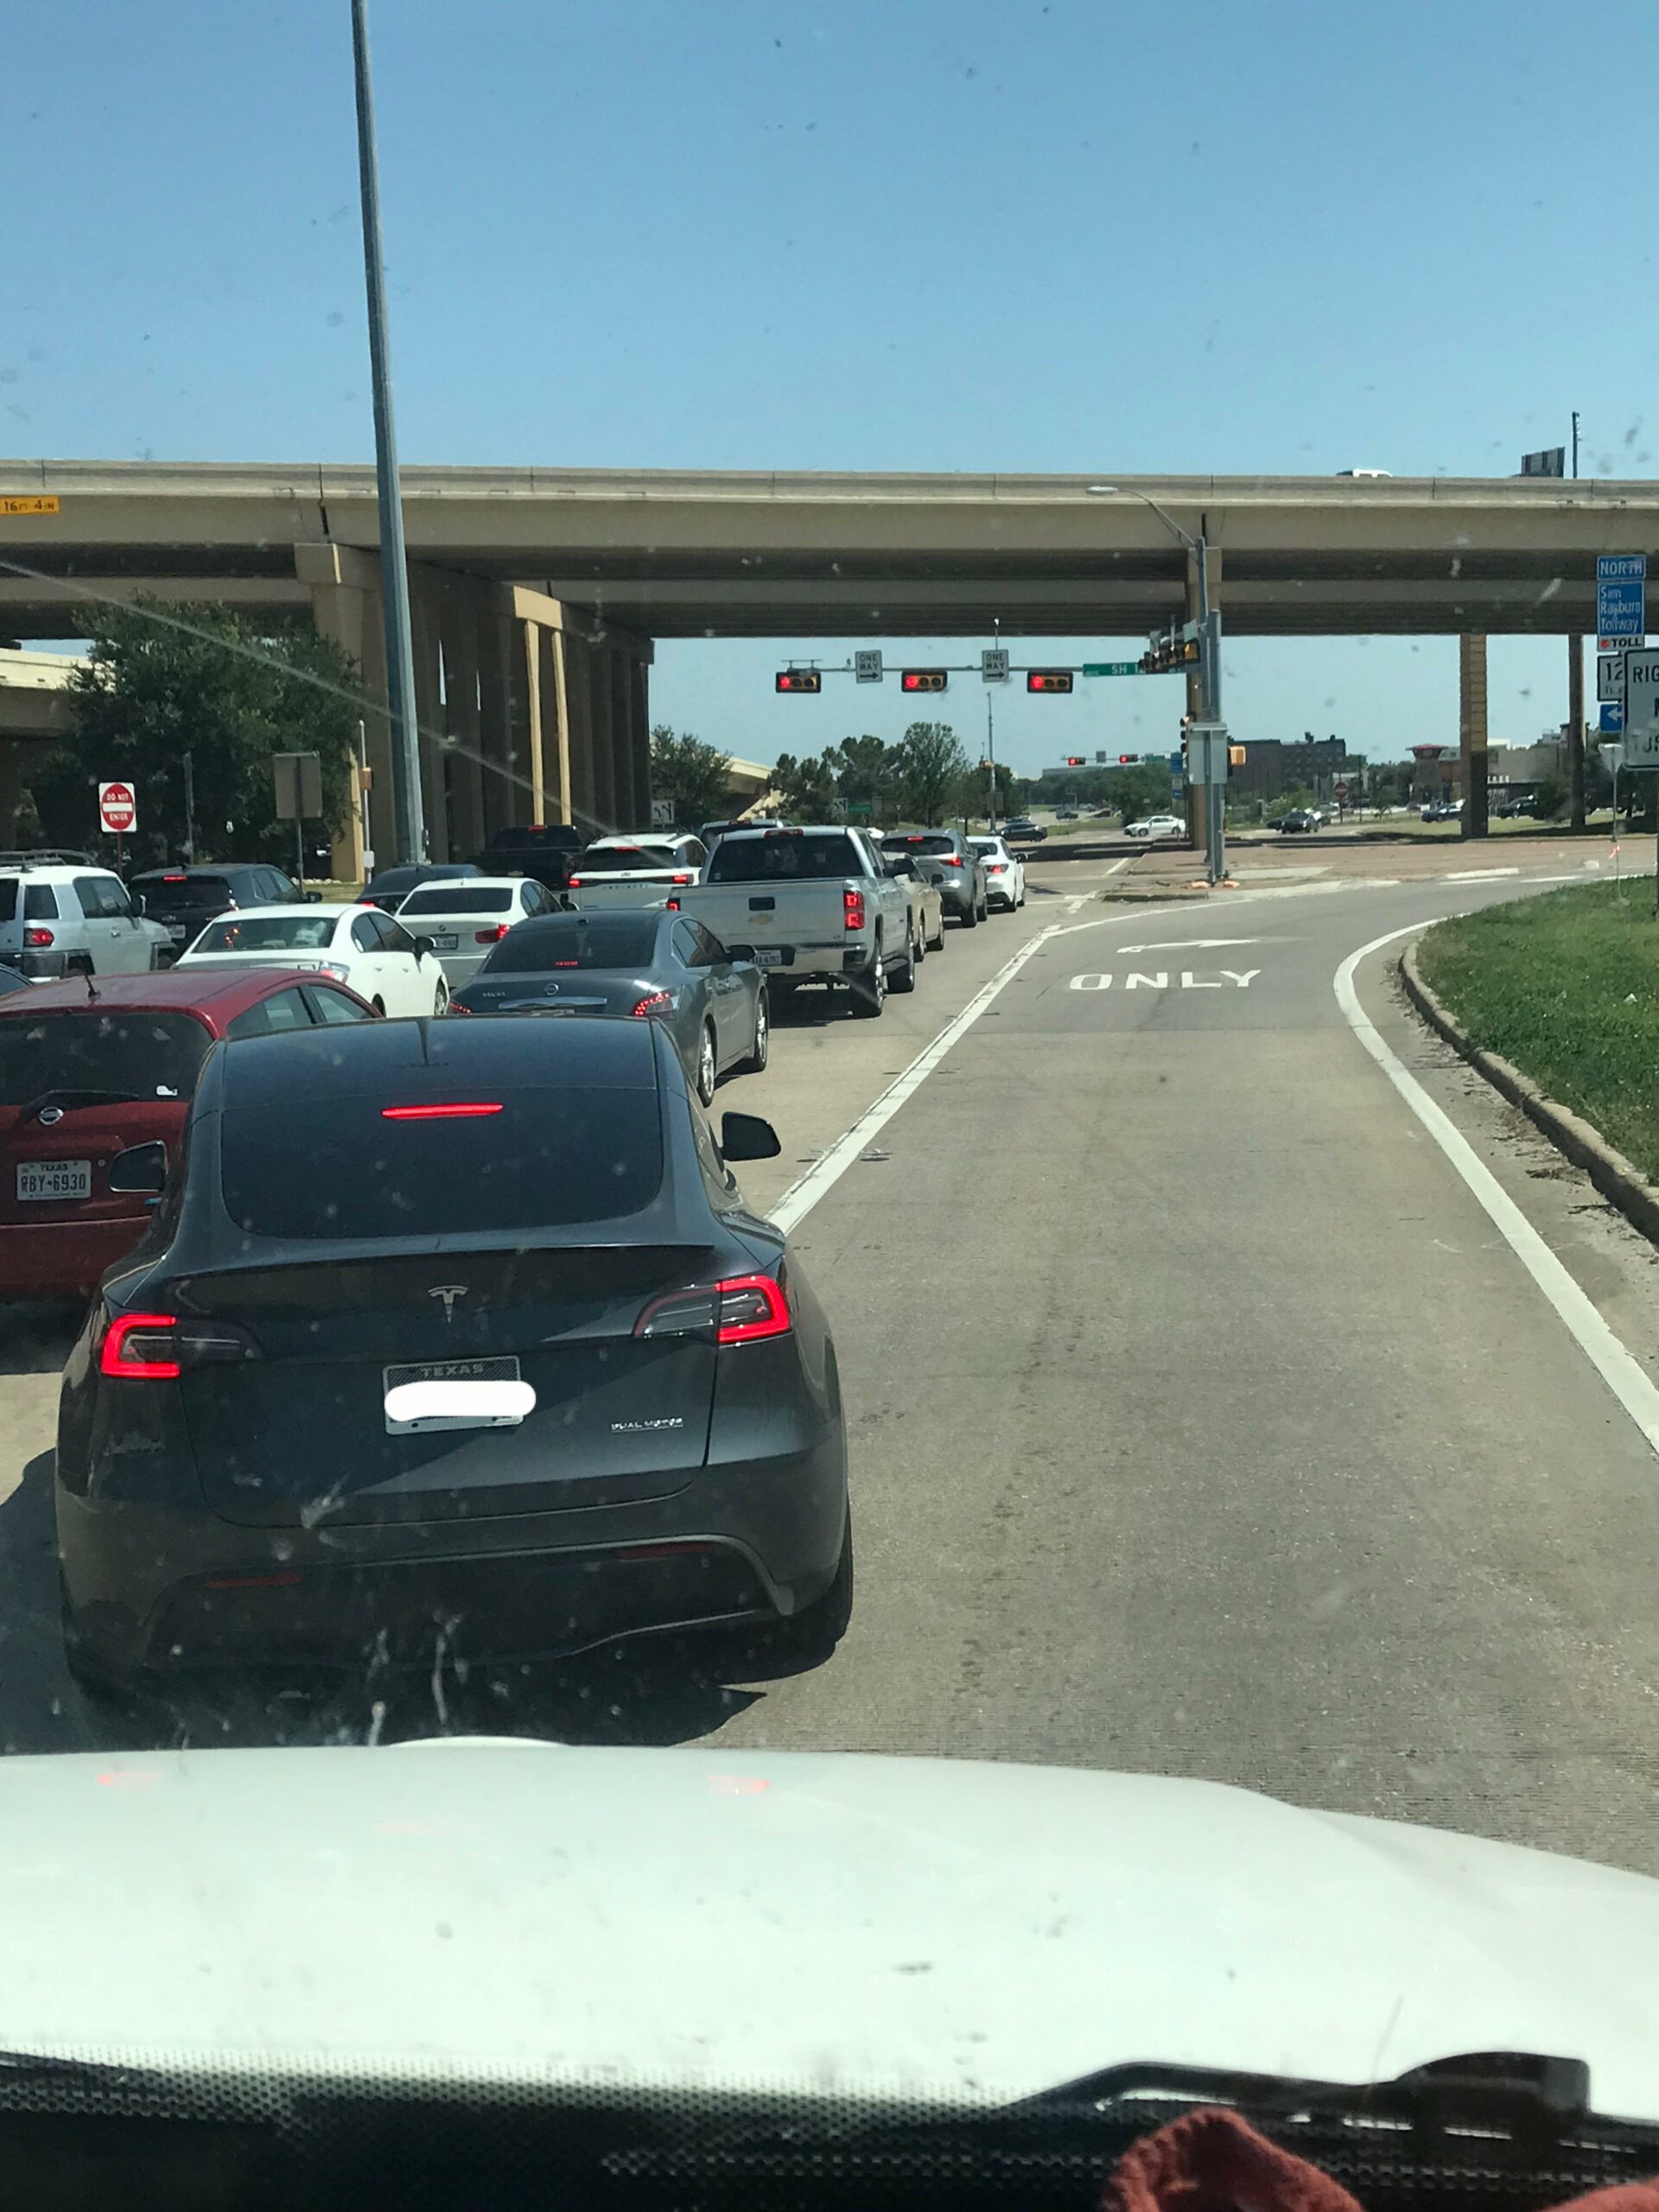 This Tesla driver (need I say more?) blocking